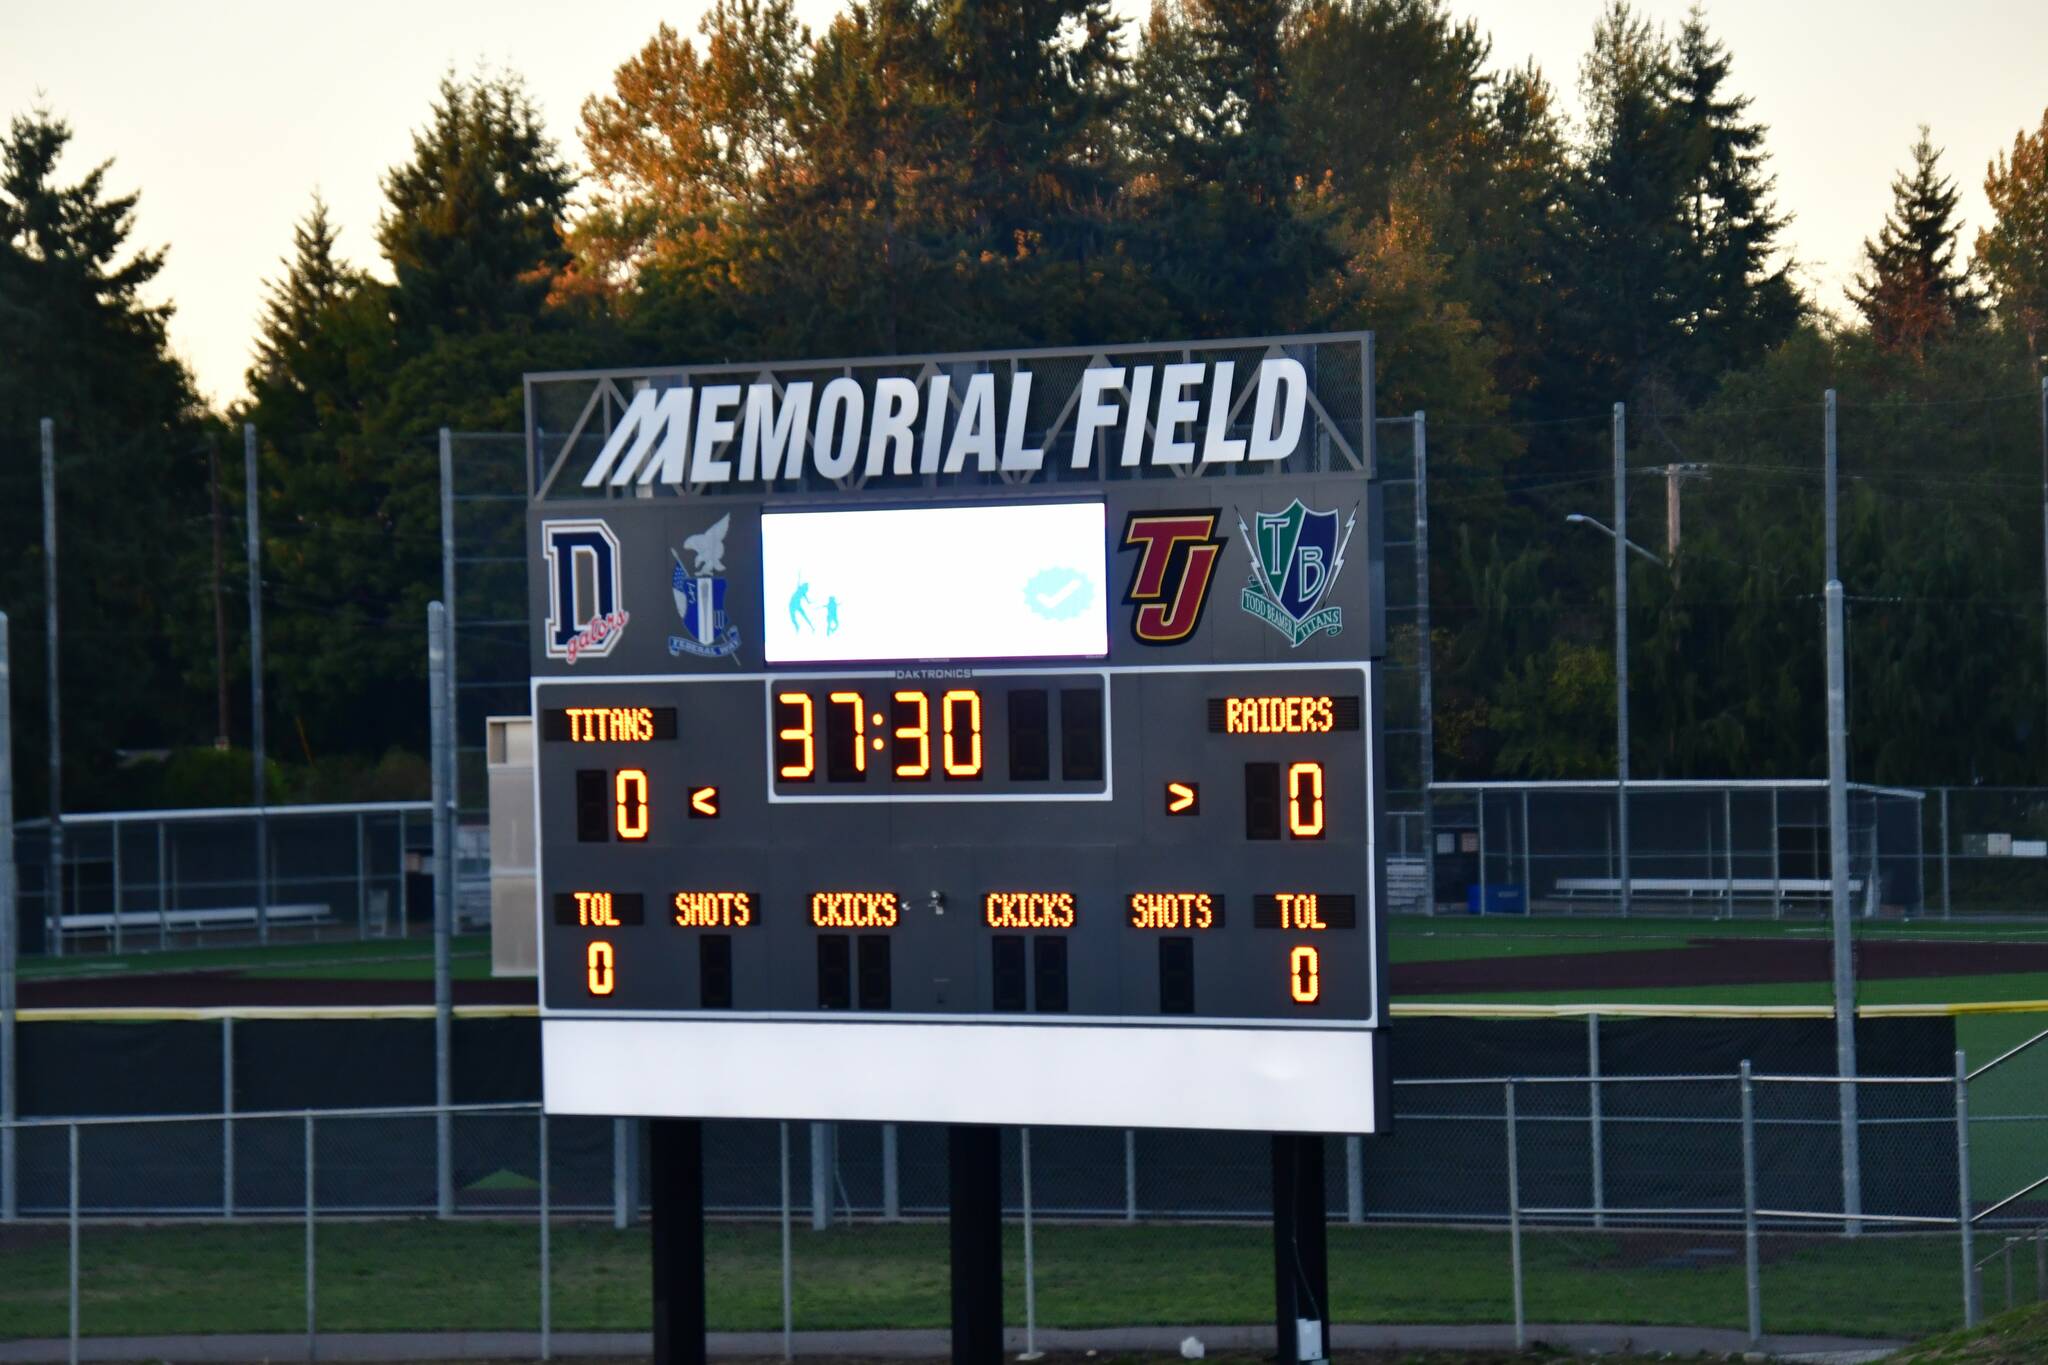 Federal Way Memorial Field’s scoreboard. (Photo courtesy of Bruce Honda)